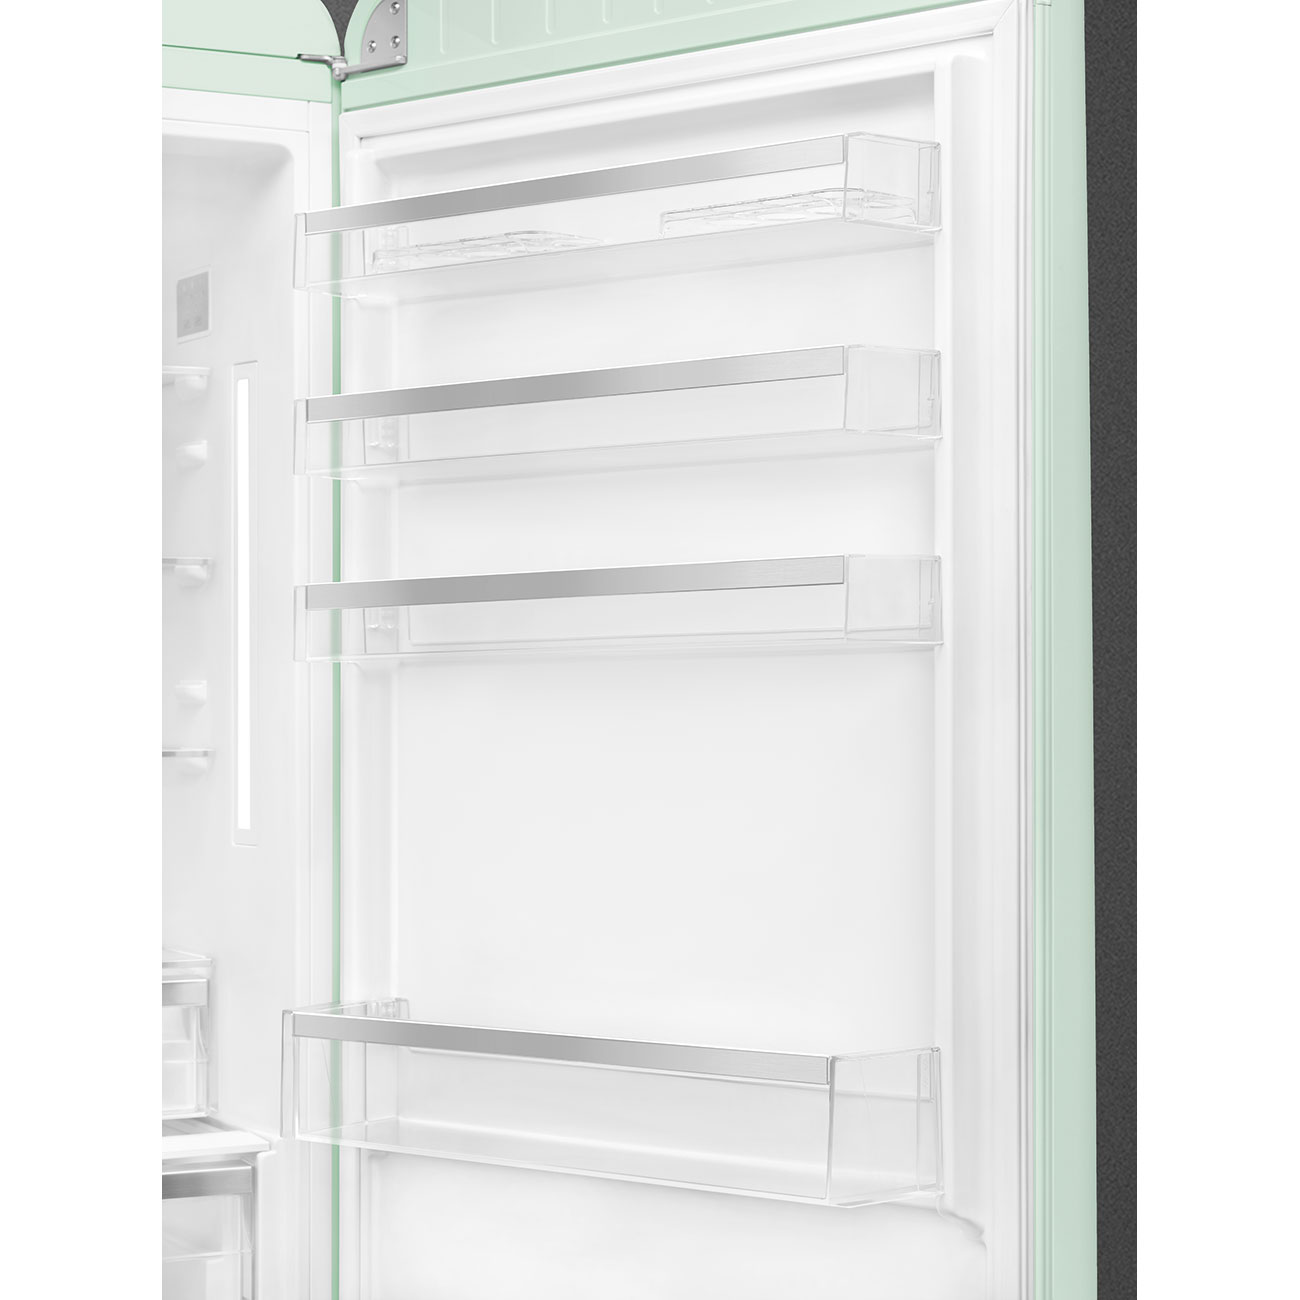 Pastel green refrigerator - Smeg_8